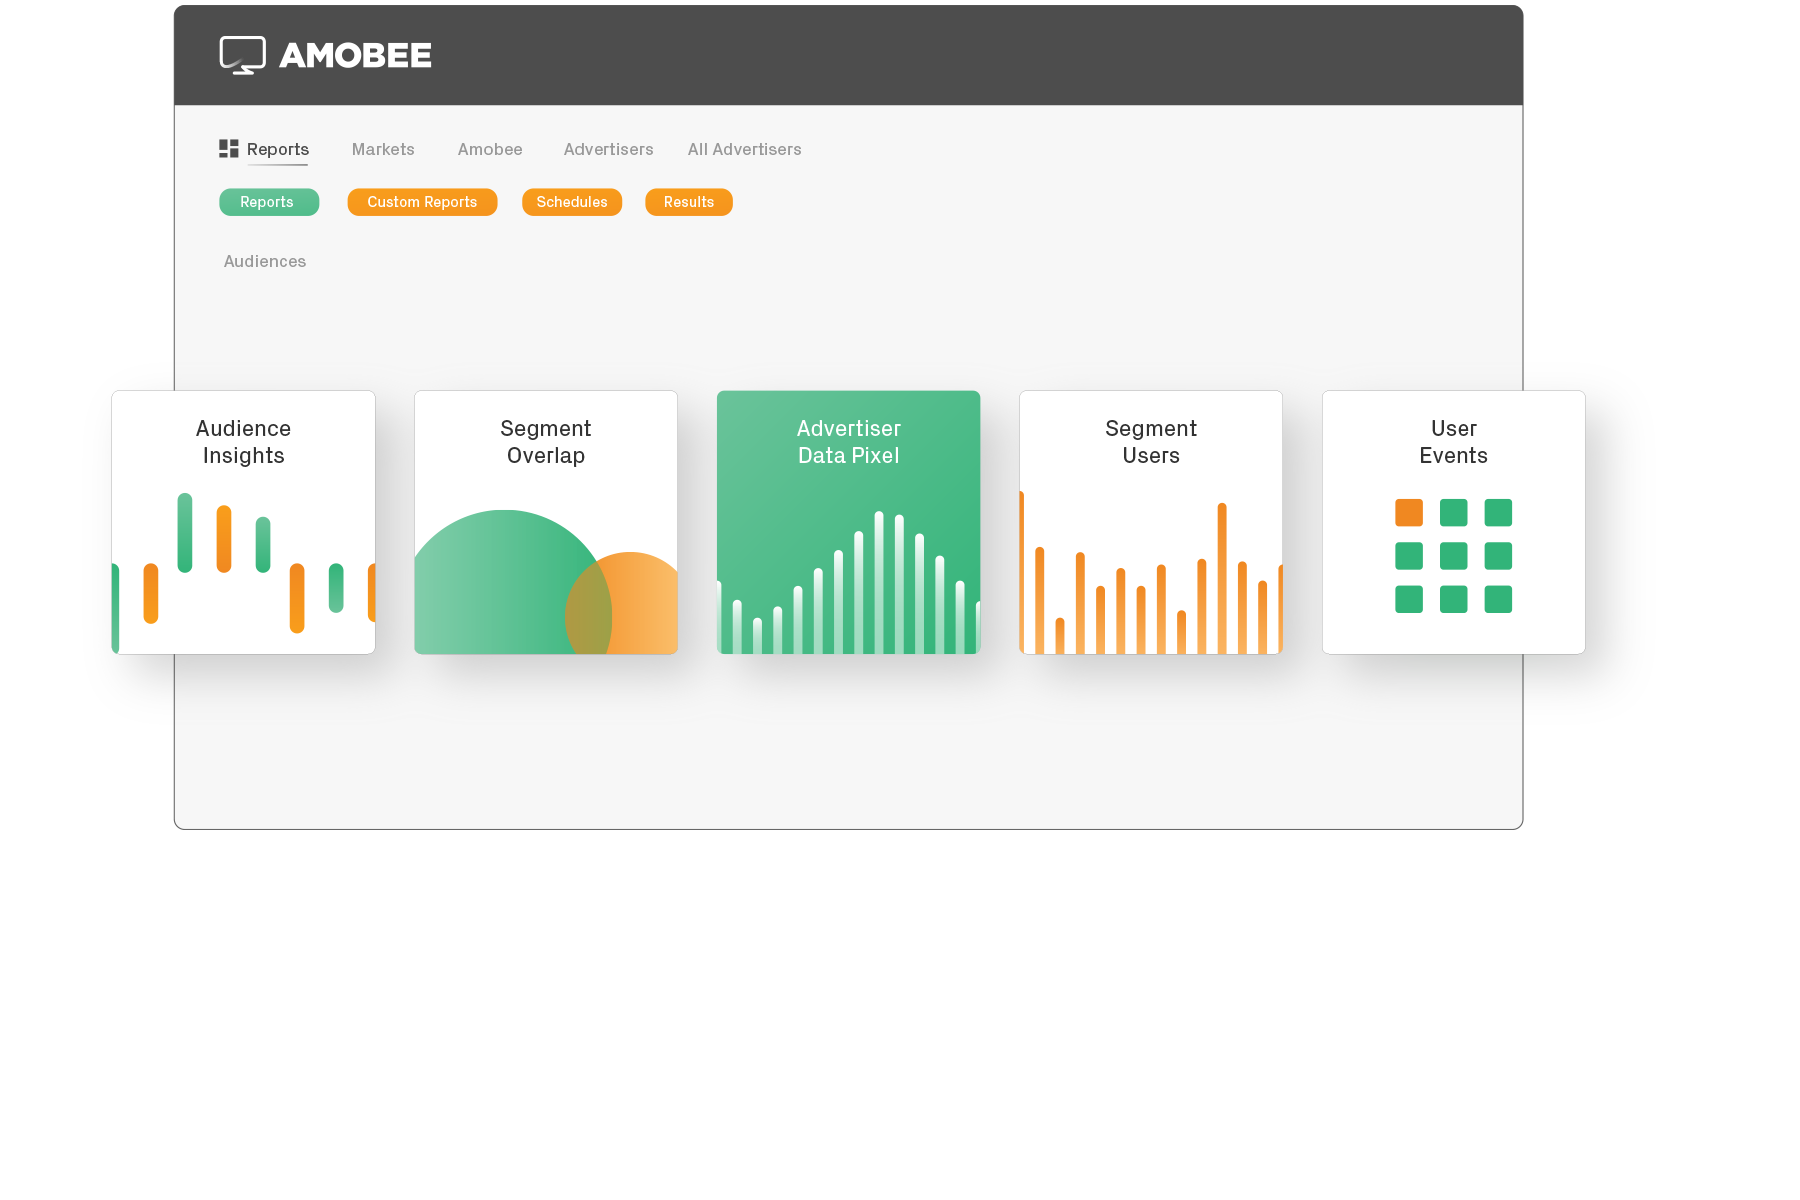 Reach your target audience through Amobee's programmatic platform